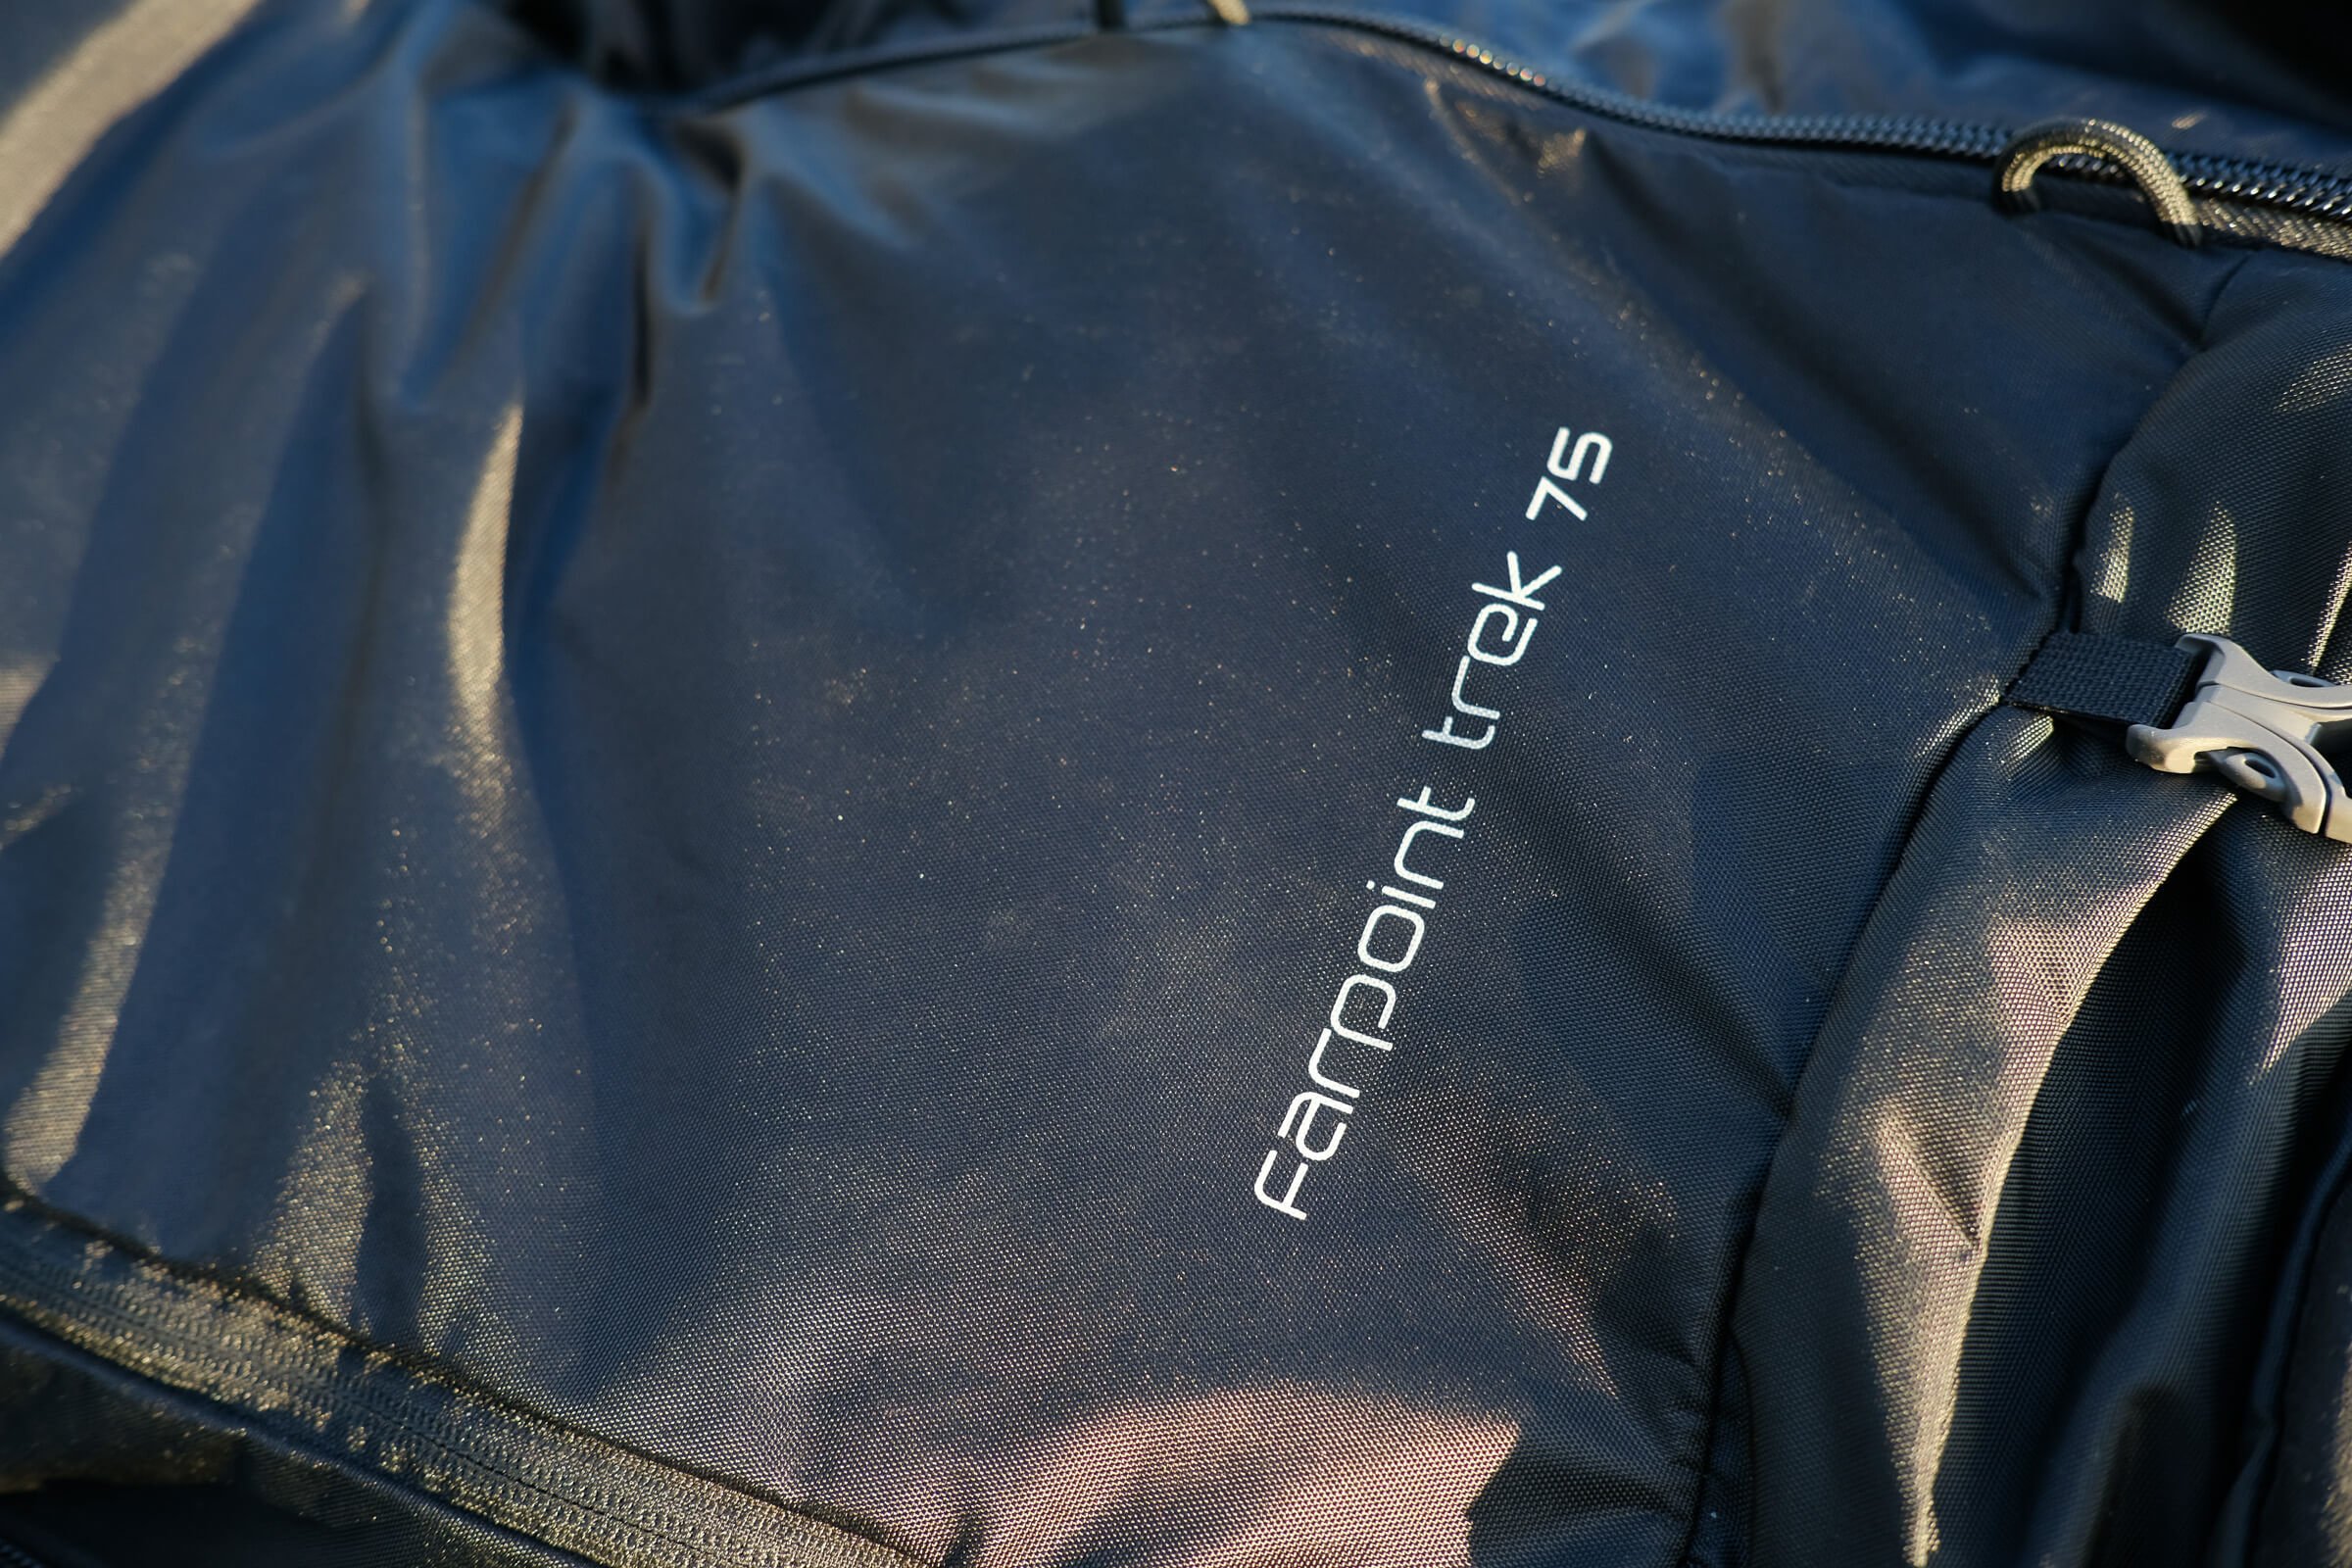 Osprey Farpoint Trek 75 Review: Hybrid Bag (2020)